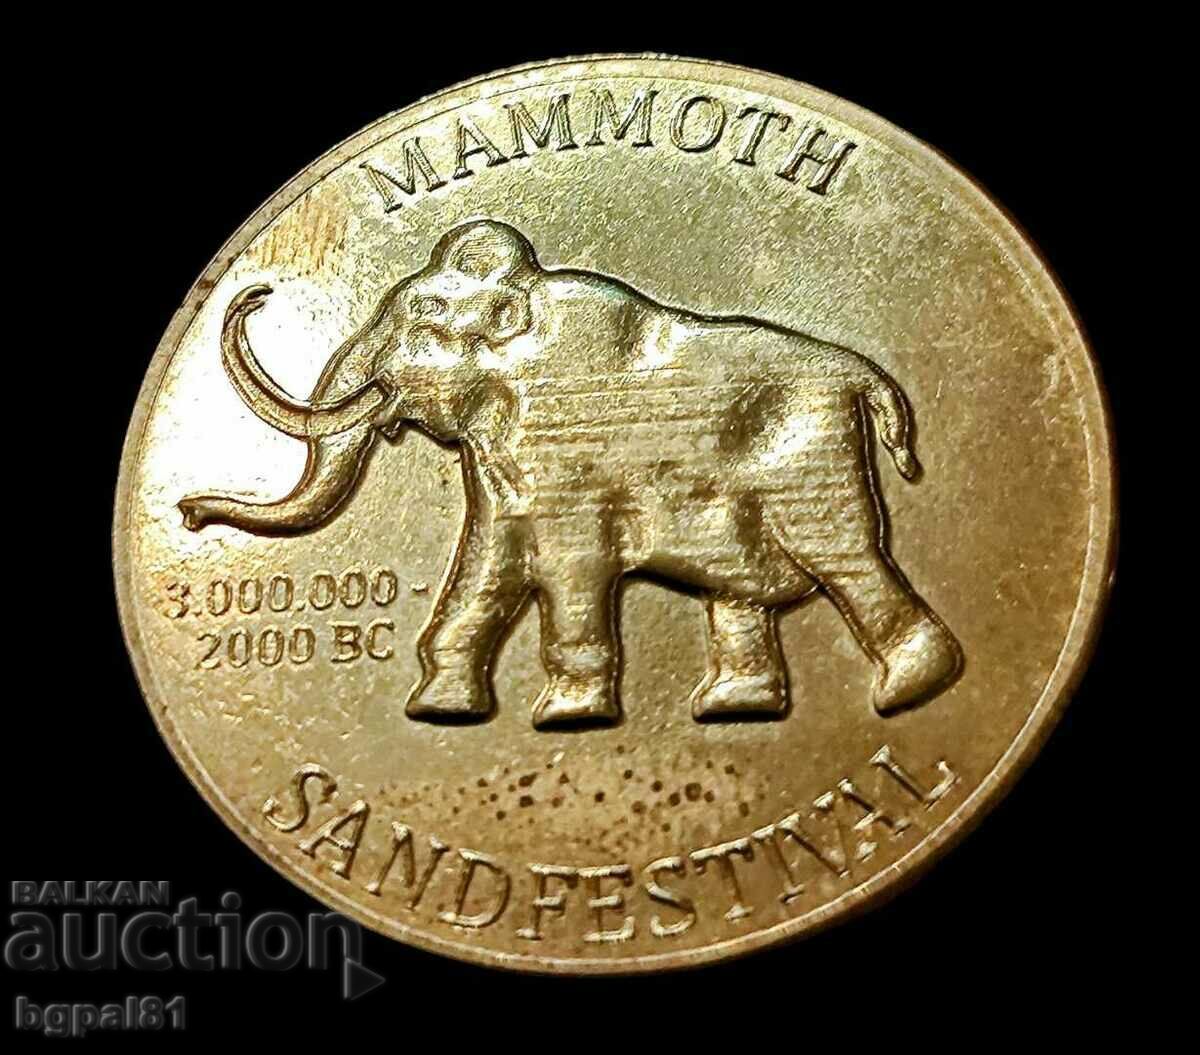 Mammoth - "Bulgarian legacy" medal issue